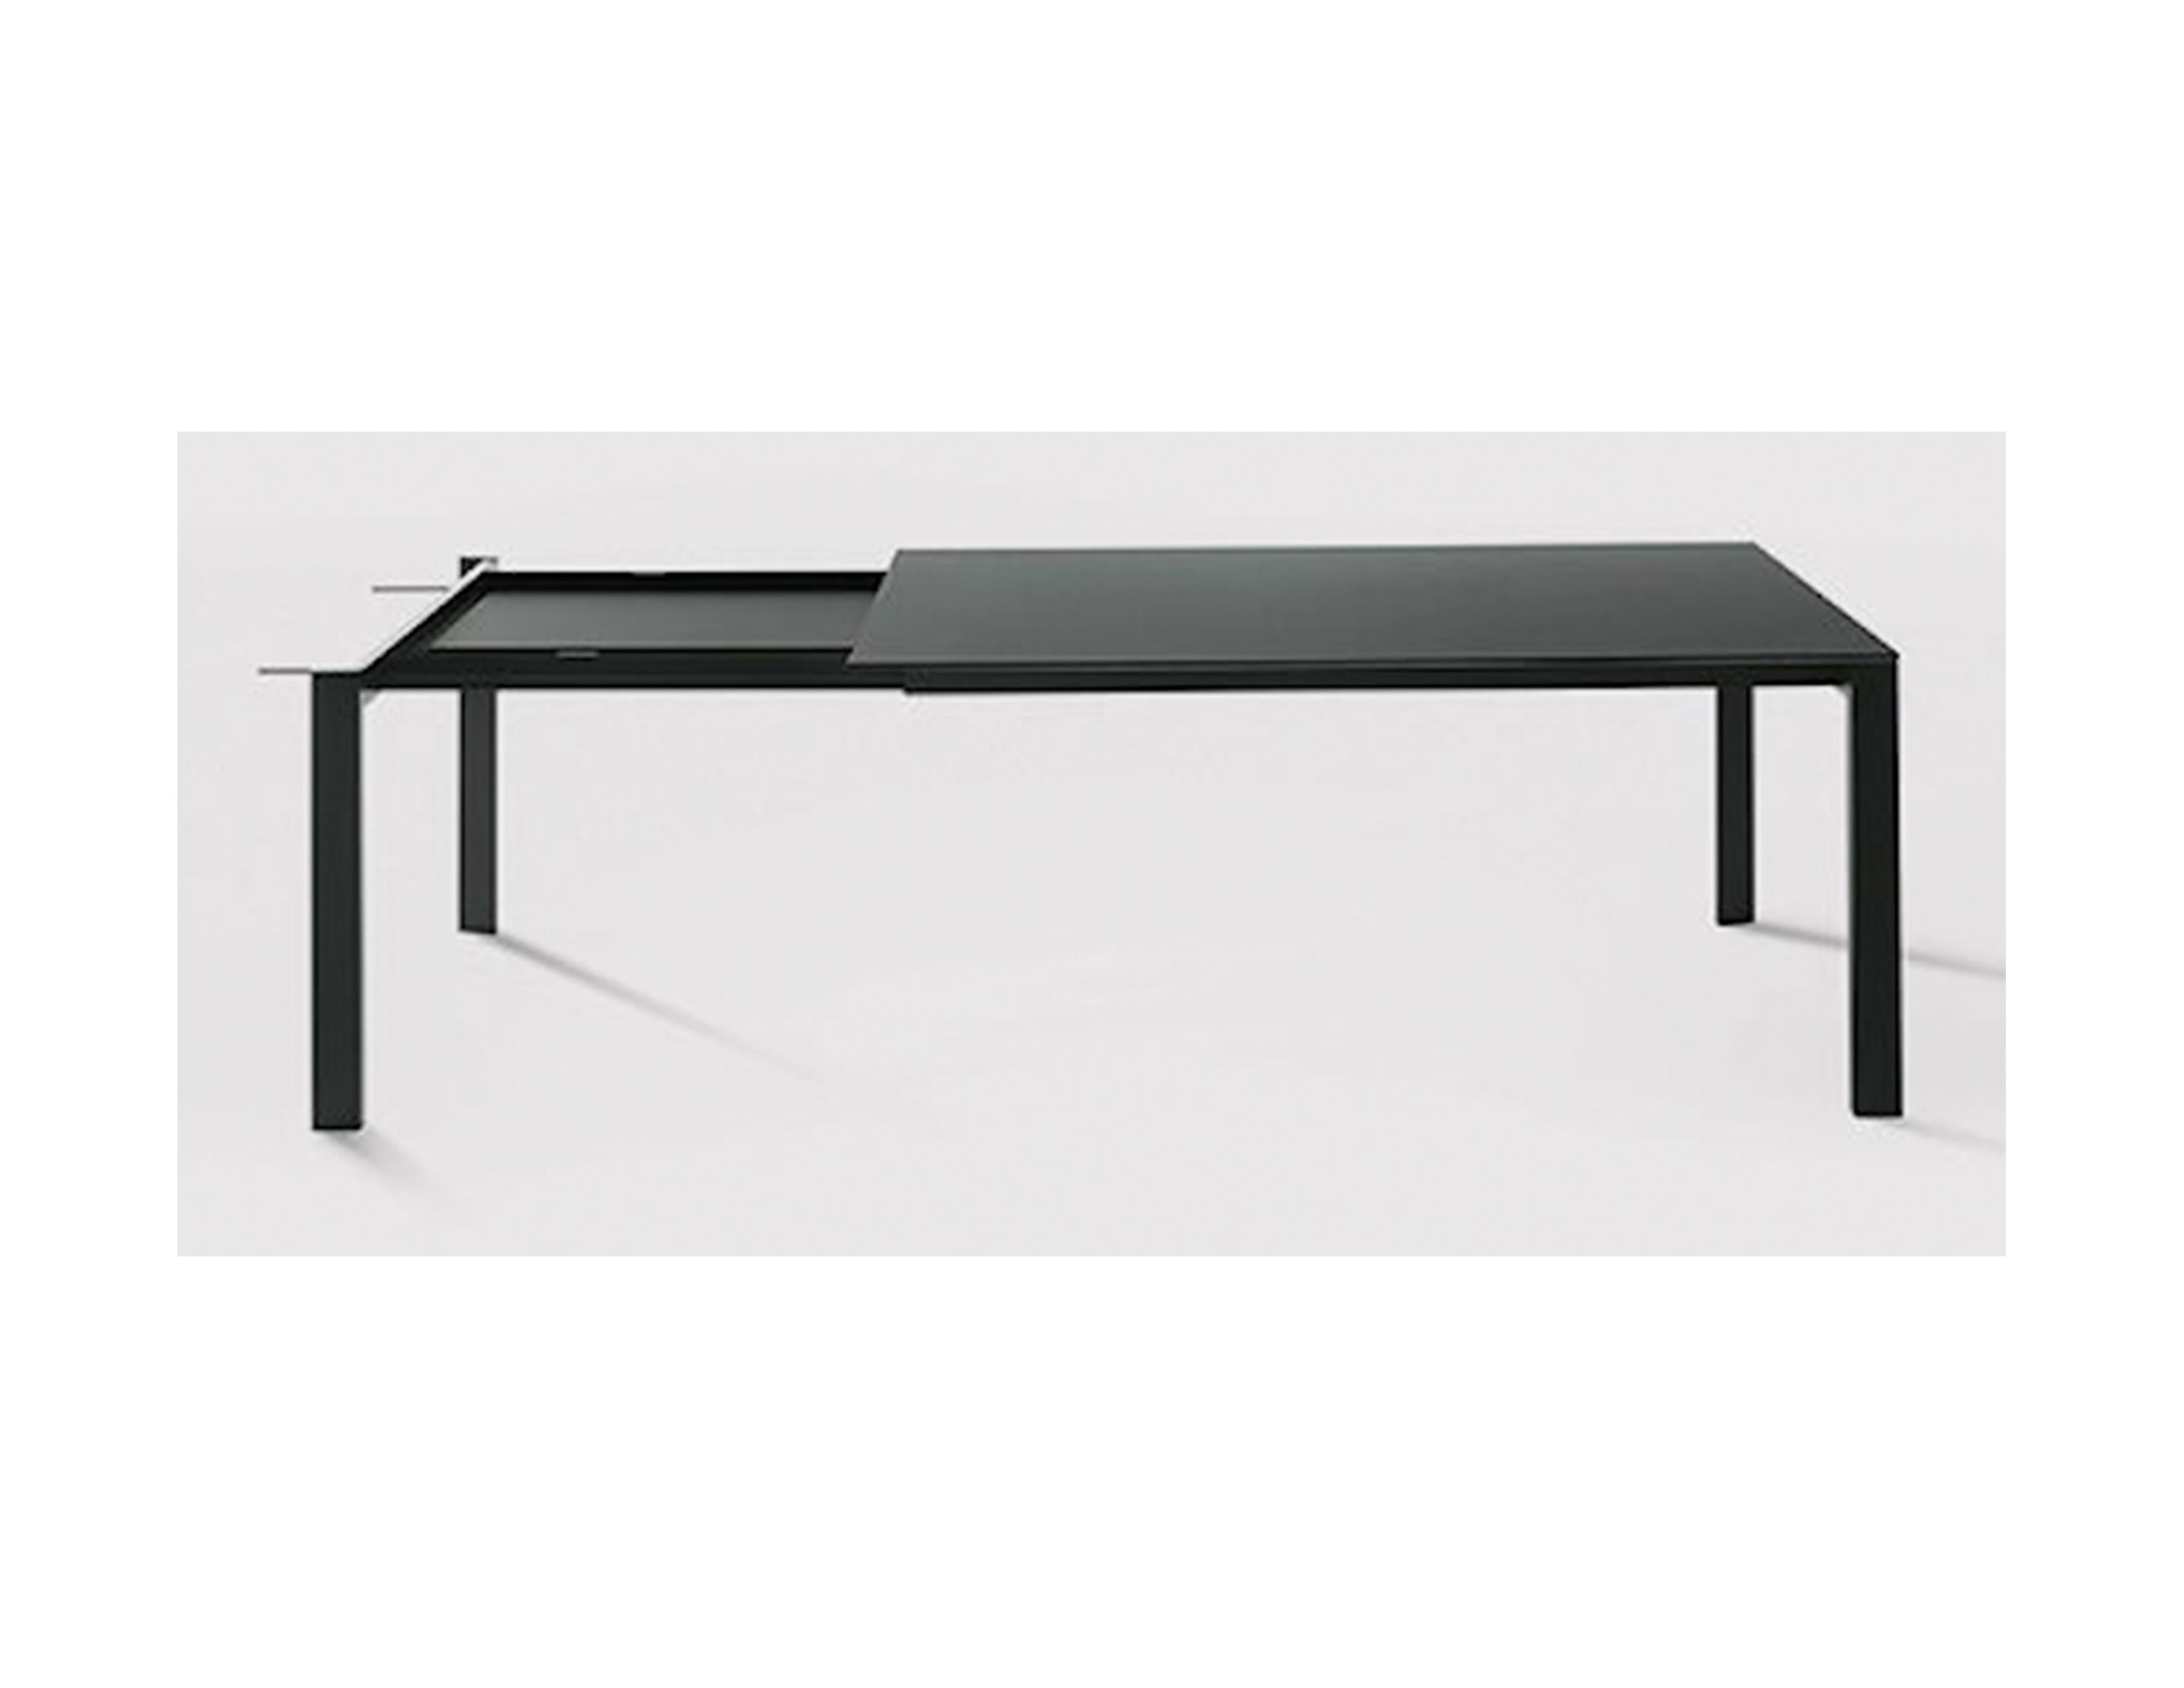 Customizable Desalto Every Extendable Table by Caronni + Bonanomi For Sale 3